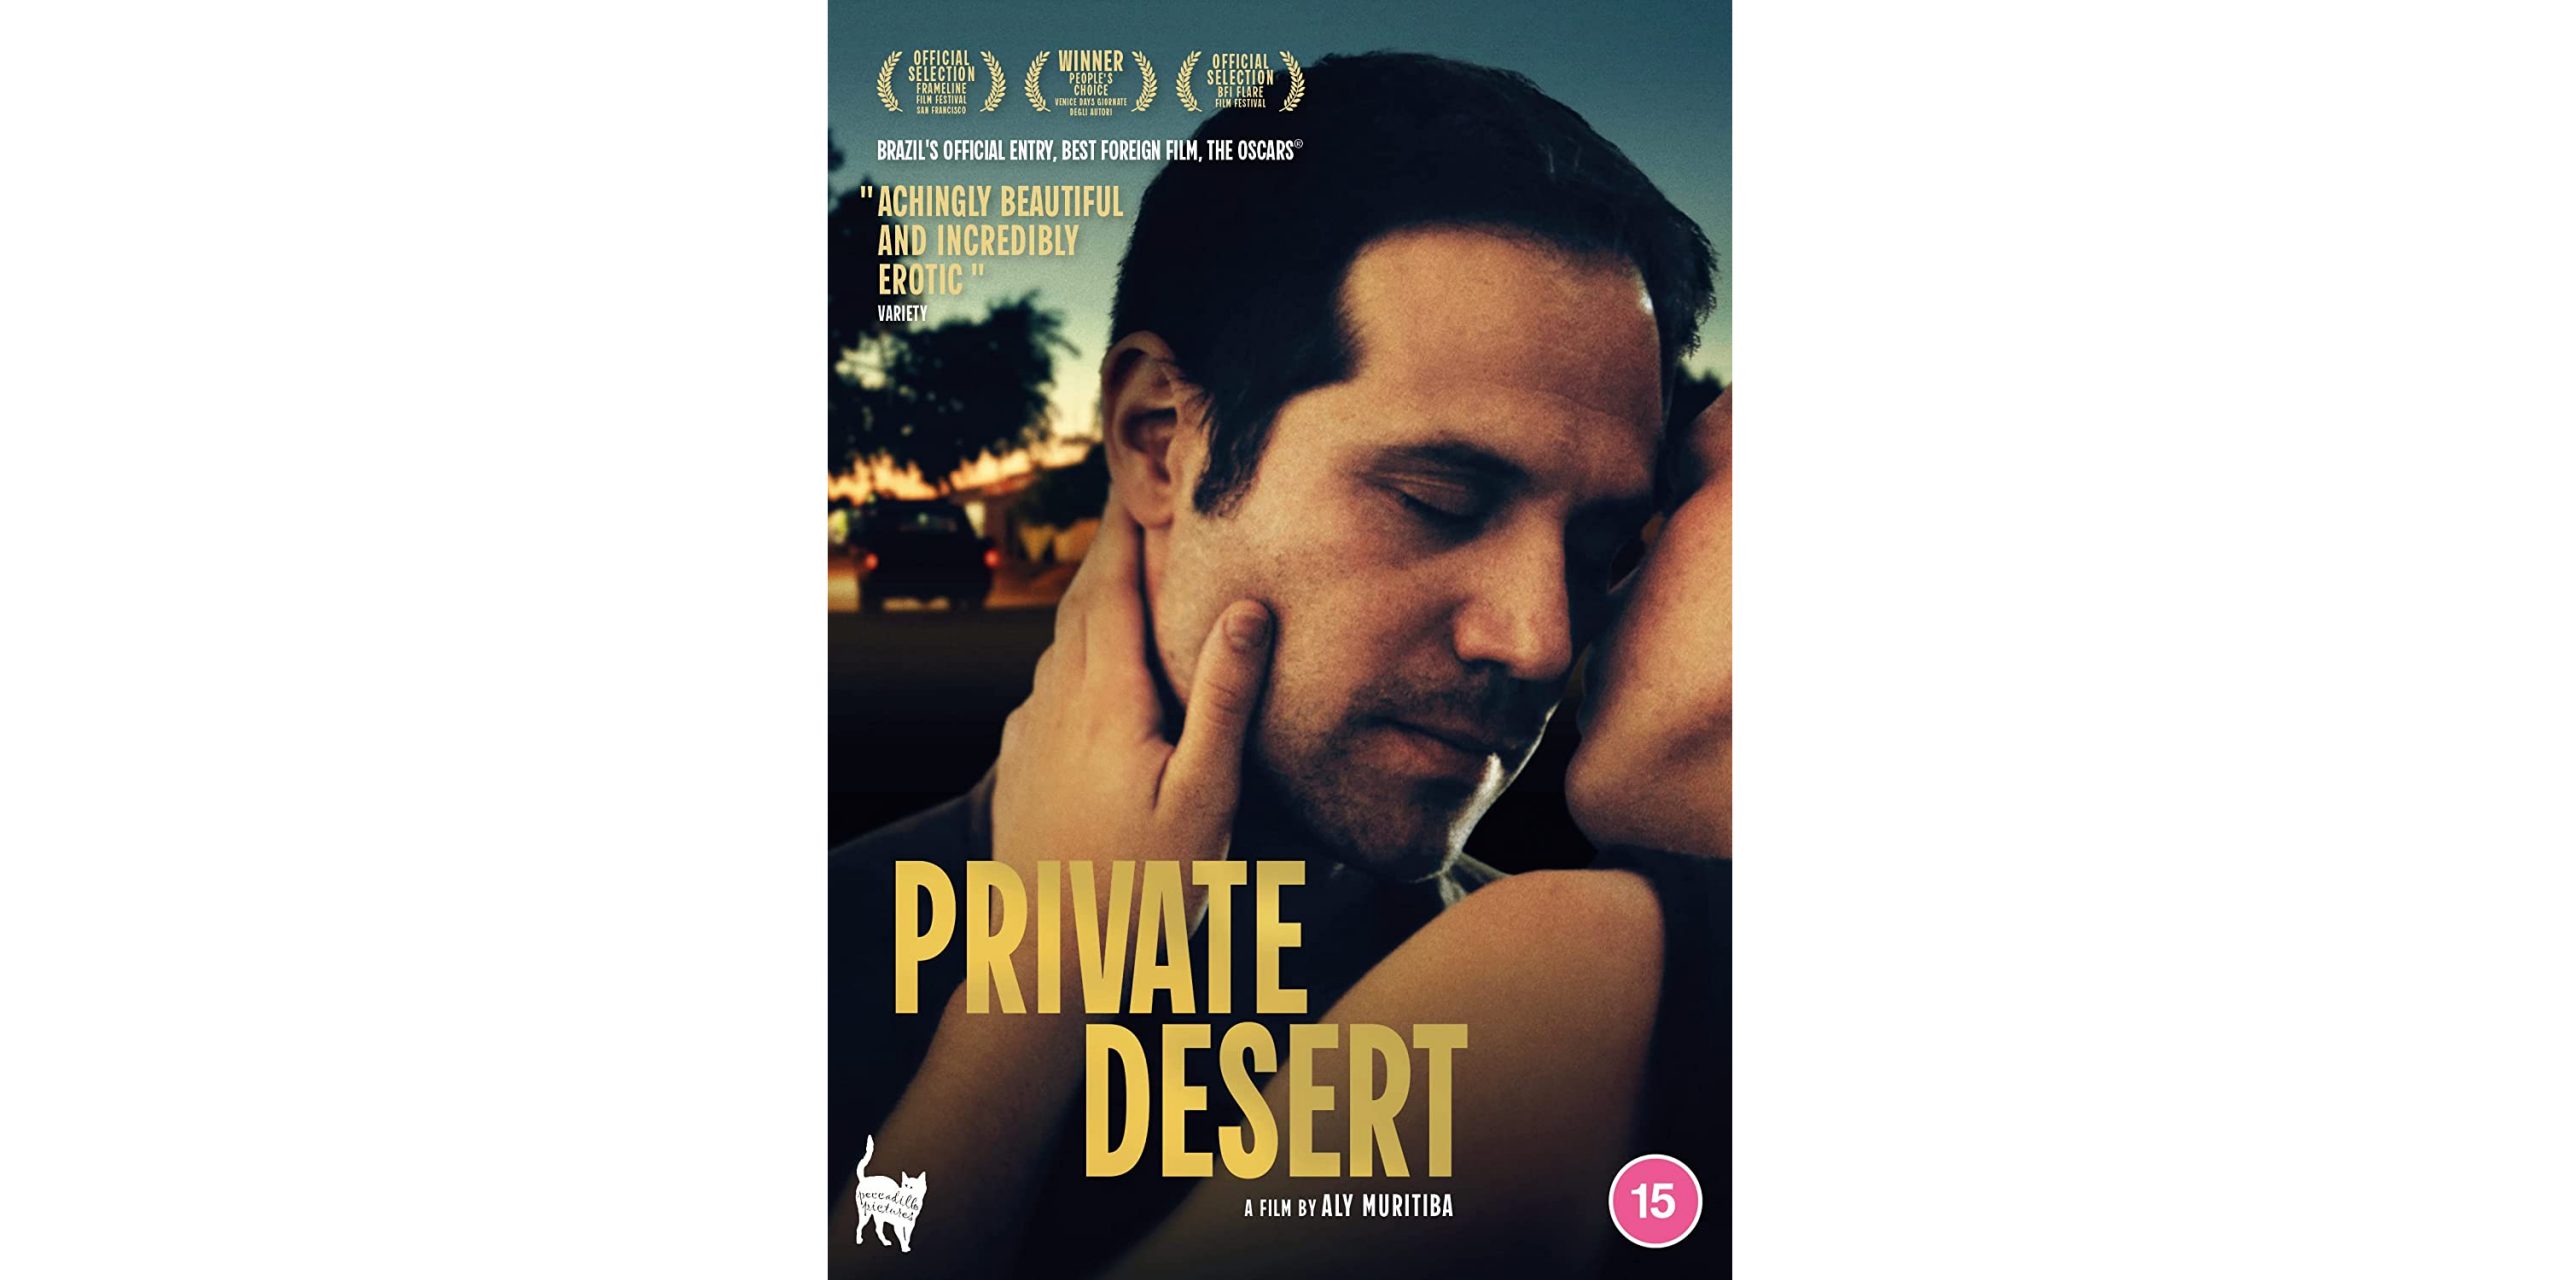 Private Desert